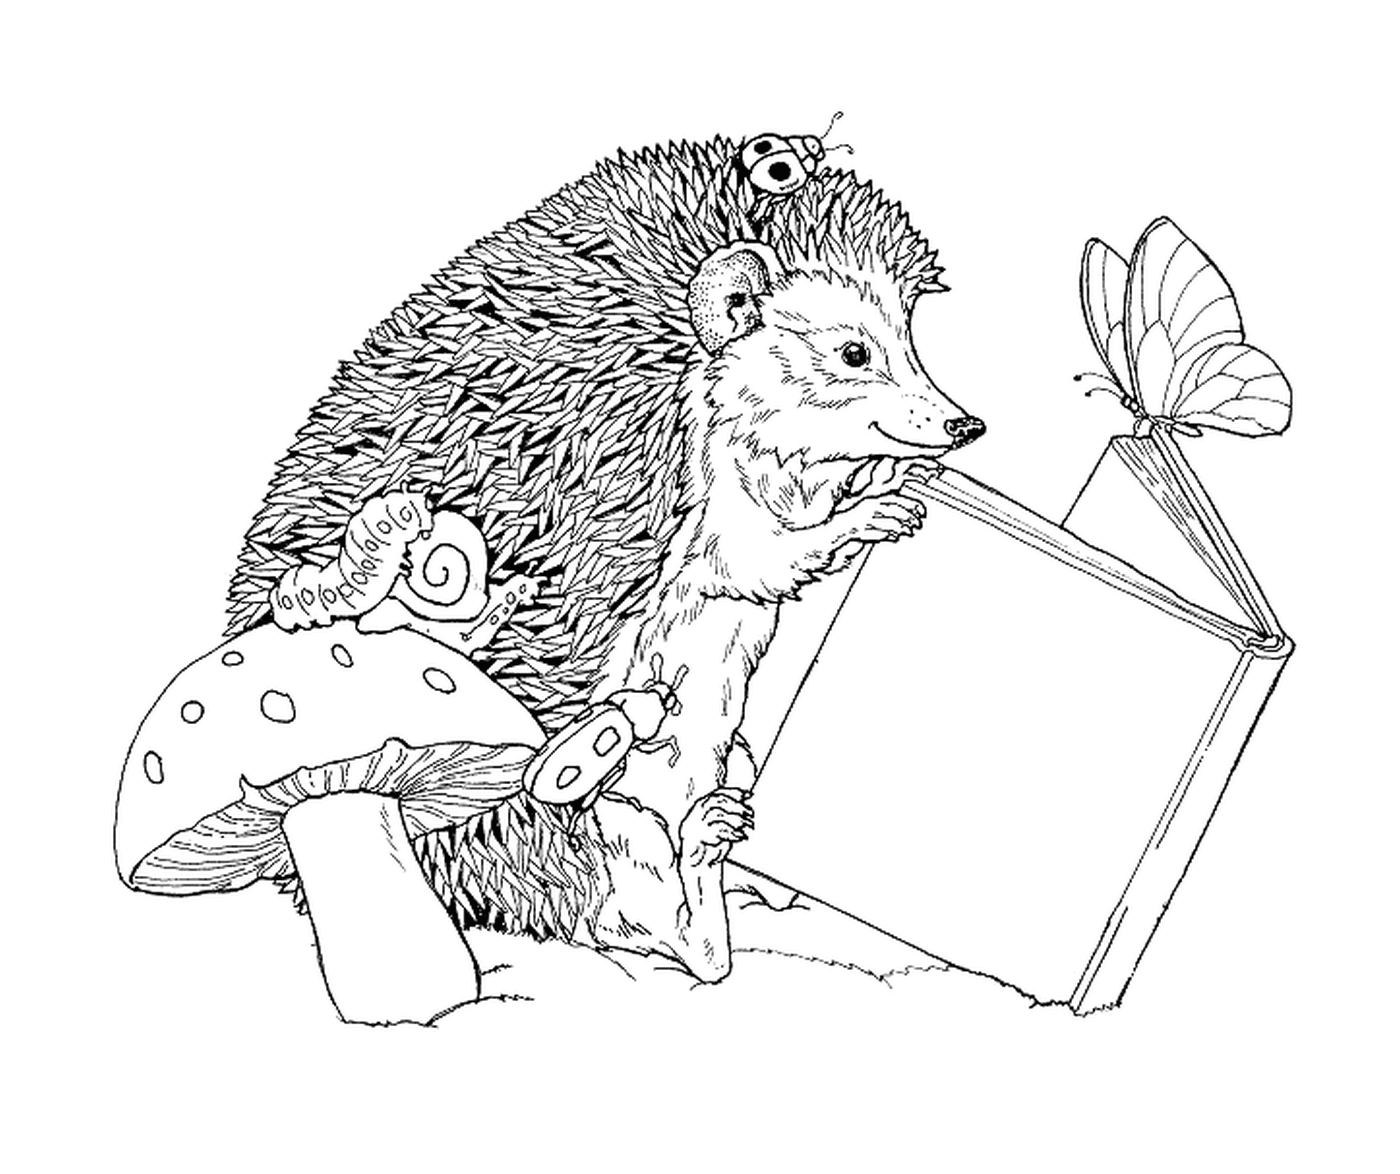  Hedgehog lettura di un libro accanto a un fungo 